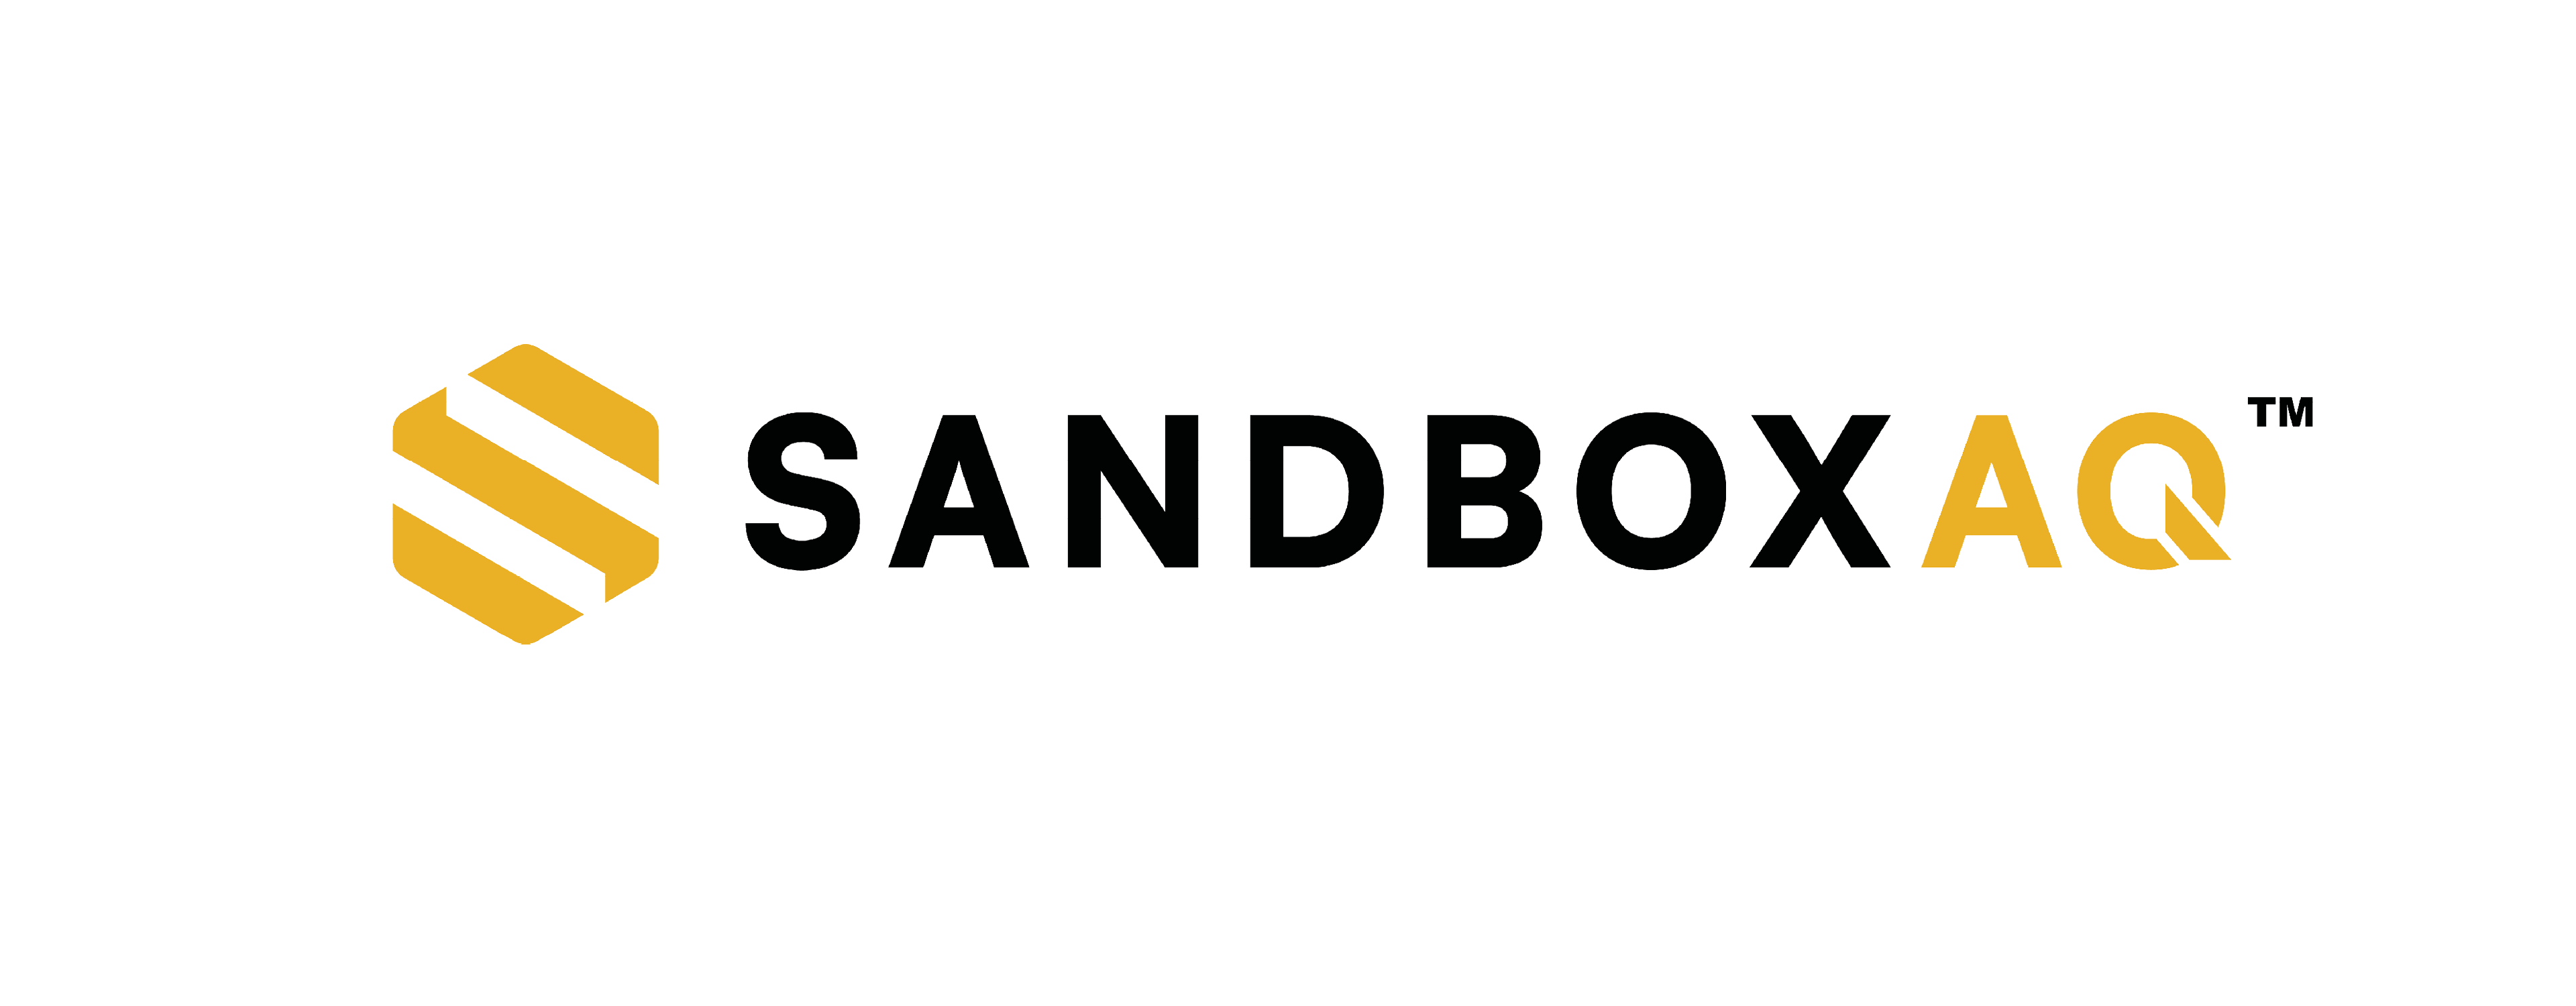 Sandbox AQ logo